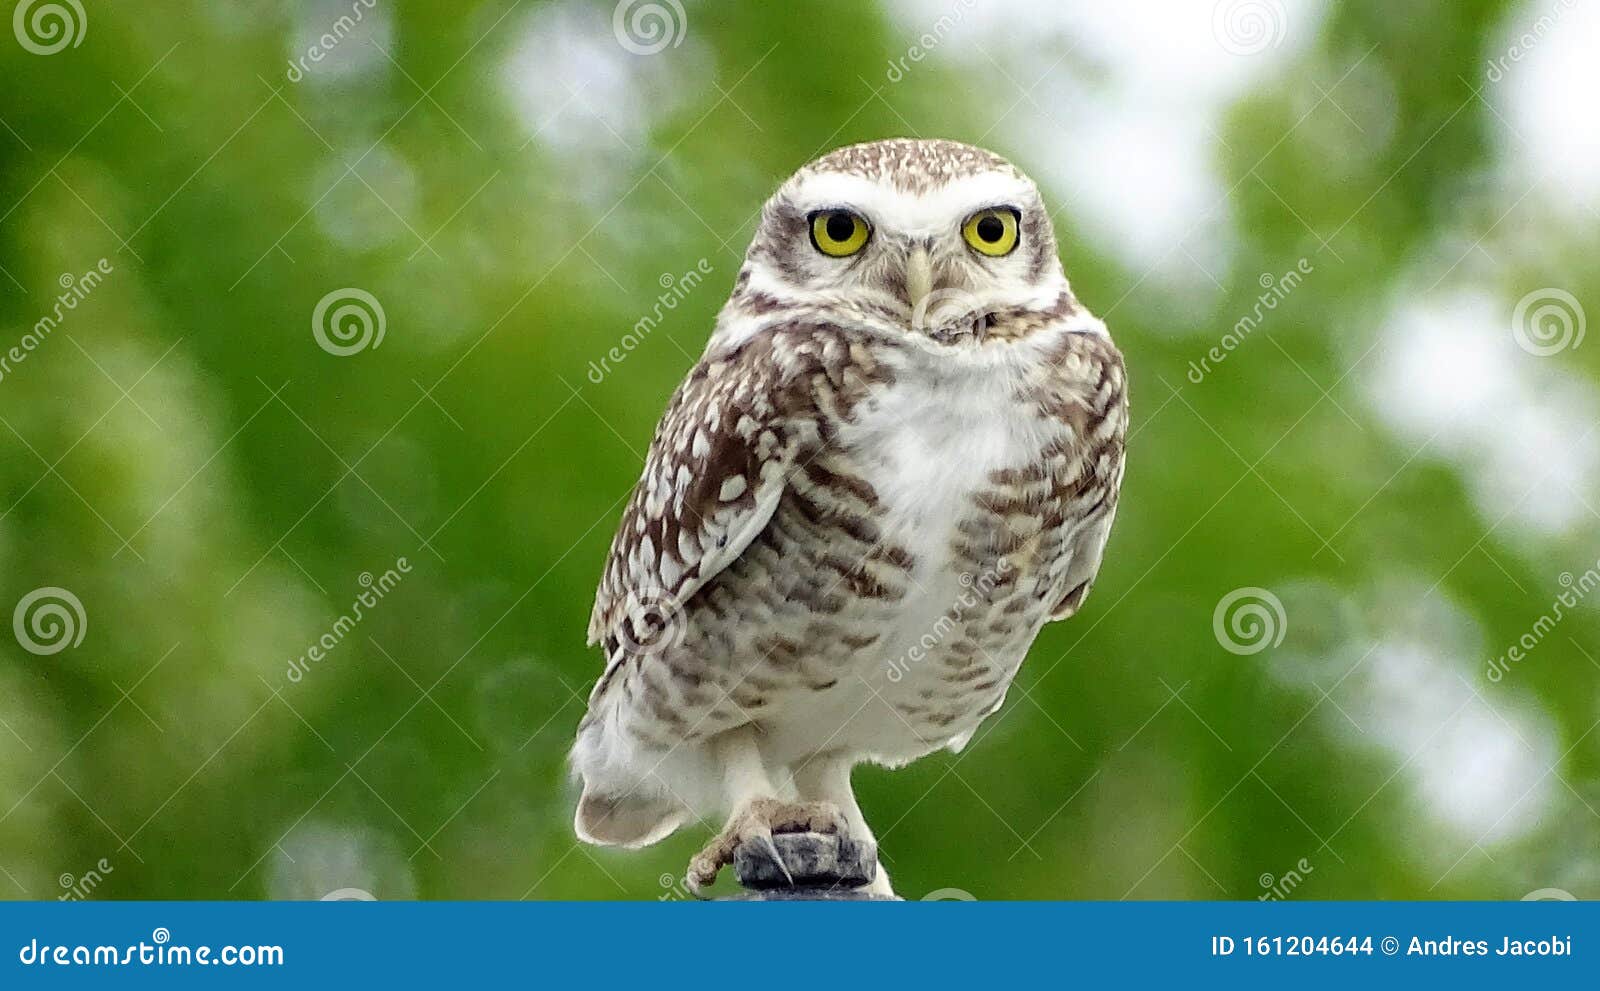 burrowing owl or `lechuza vizcachera athene cunicularia